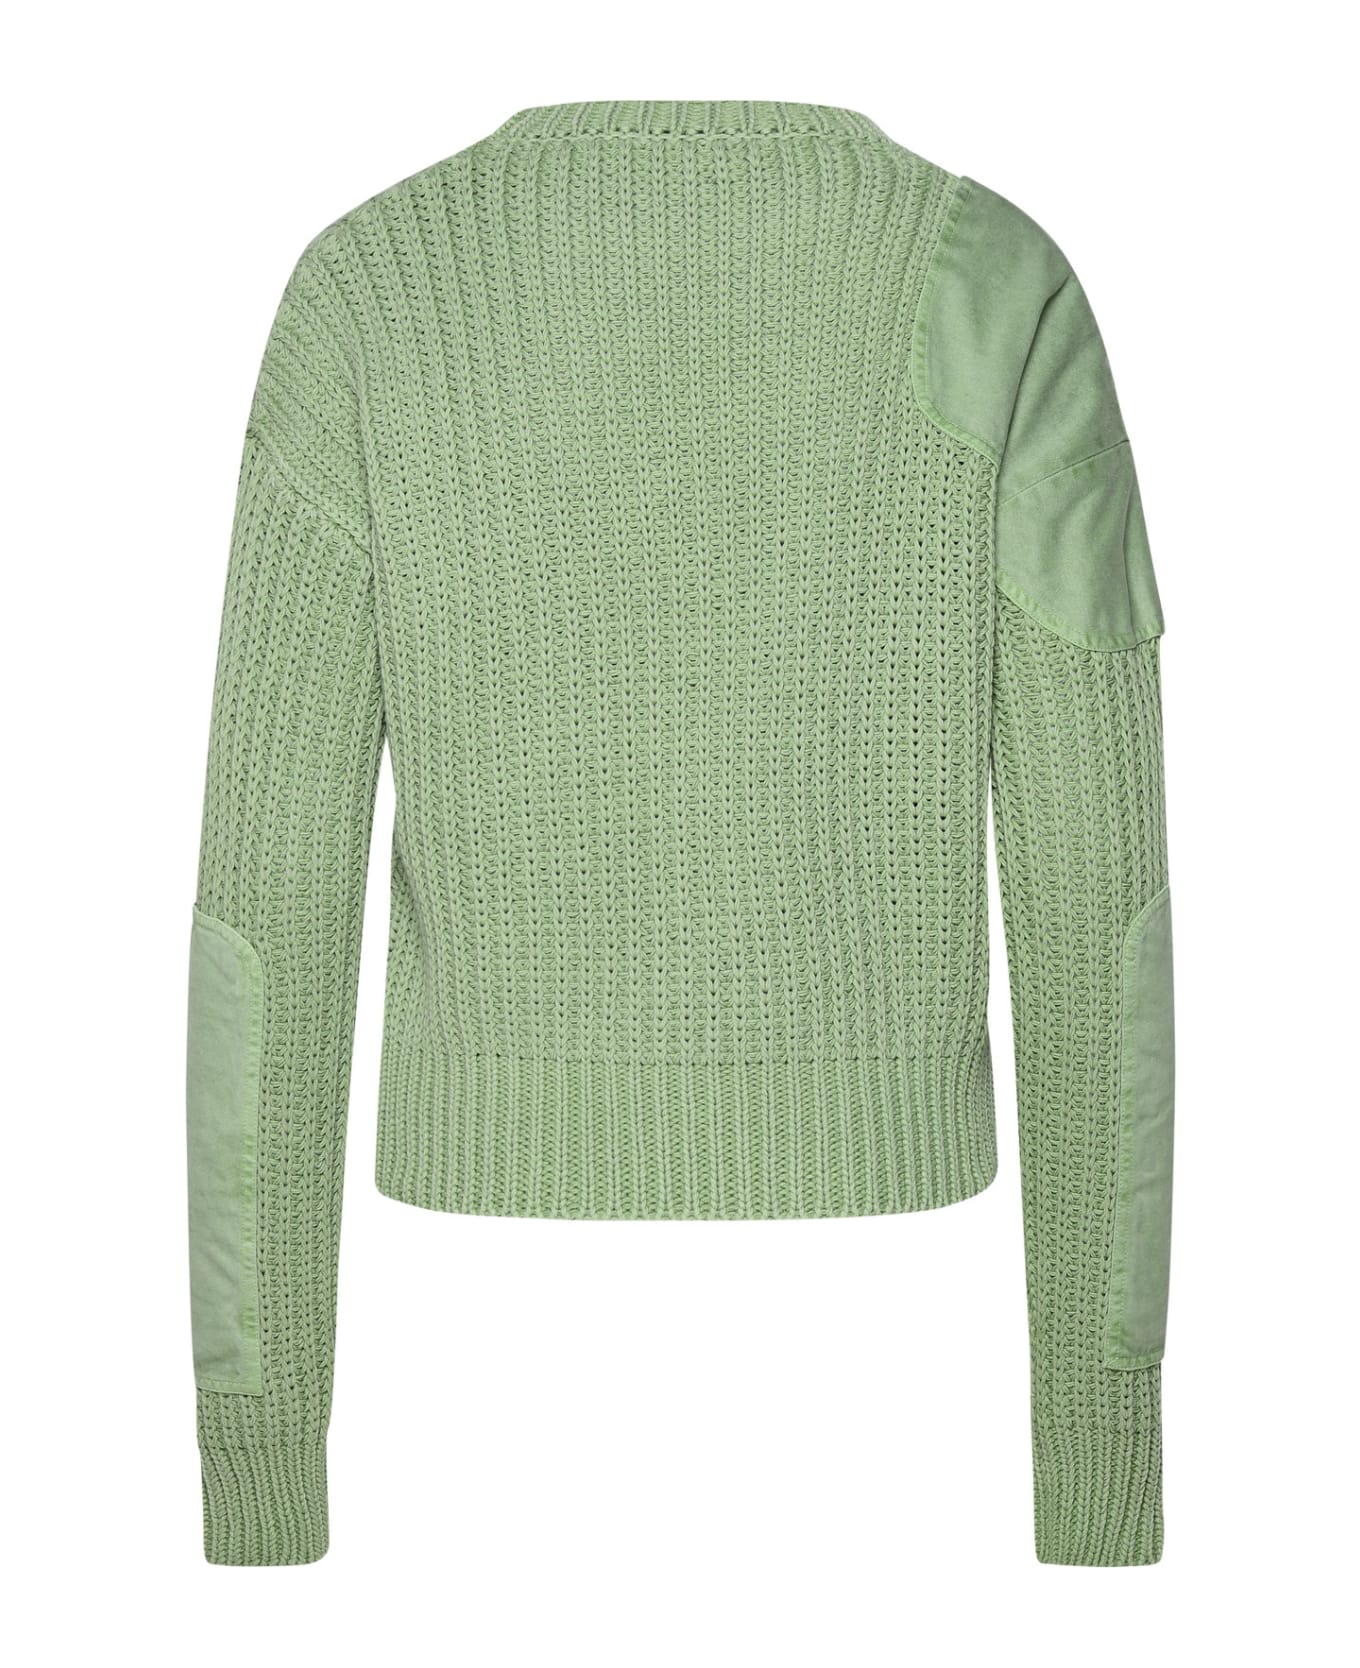 Max Mara 'abisso1234' Sage Green Cotton Sweater - Green ニットウェア